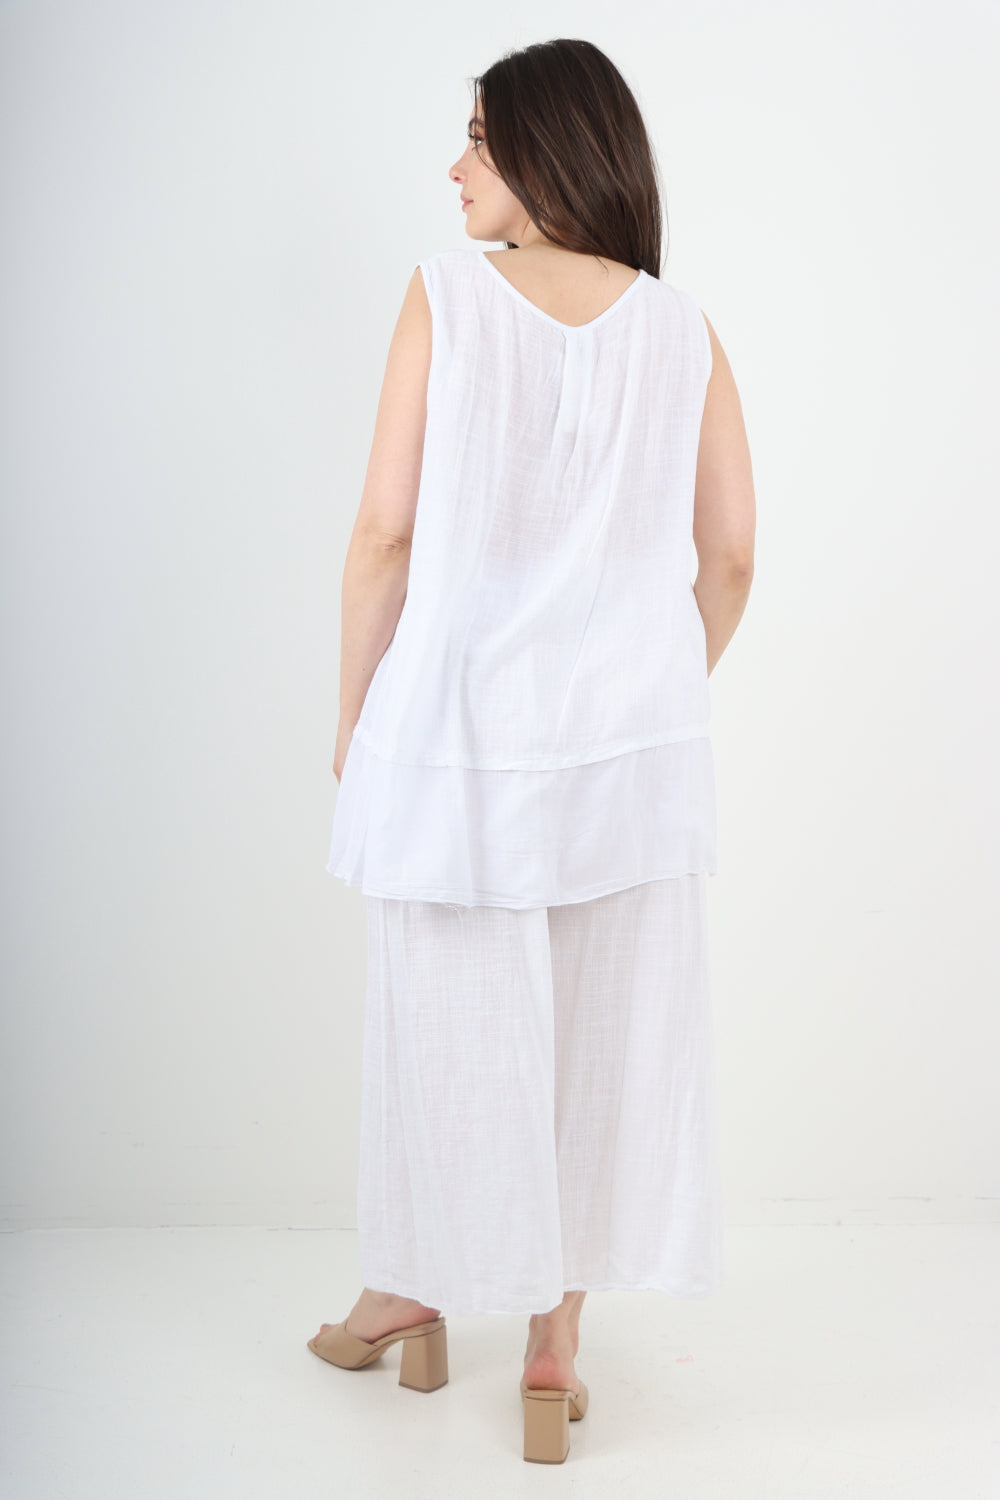 Cotton Sleeveless Vest Top & Palazzo Co-Ord Set